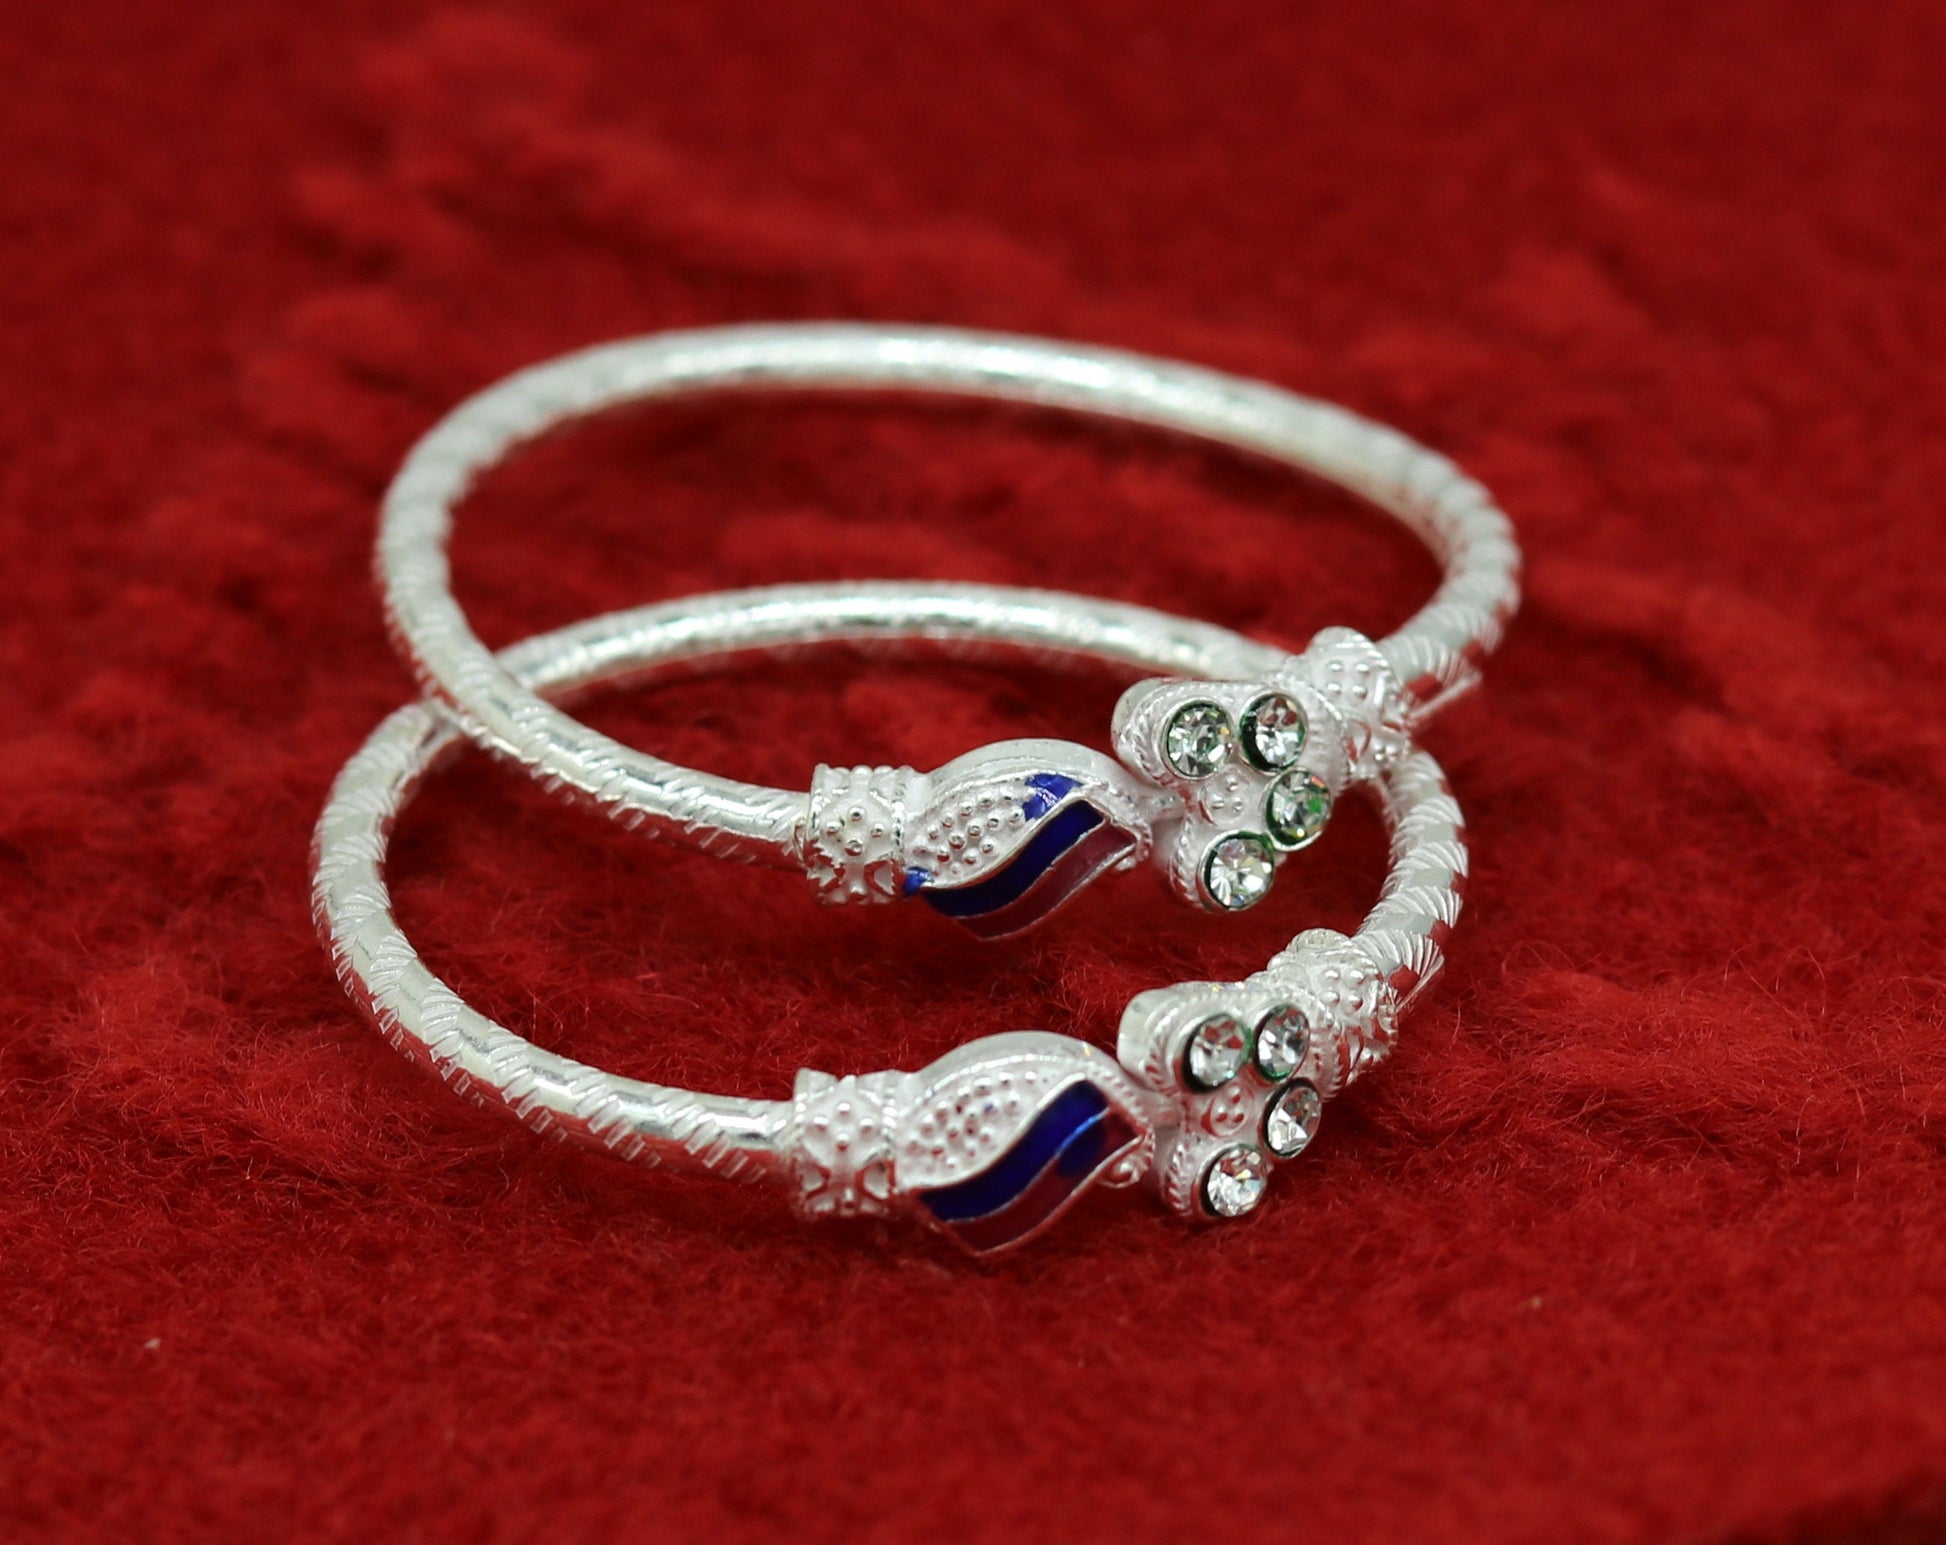 Handmade vintage customized design gorgeous silver baby bangle kada, excellent enamel design bangle bracelet unisex kids jewelry nbbk91 - TRIBAL ORNAMENTS